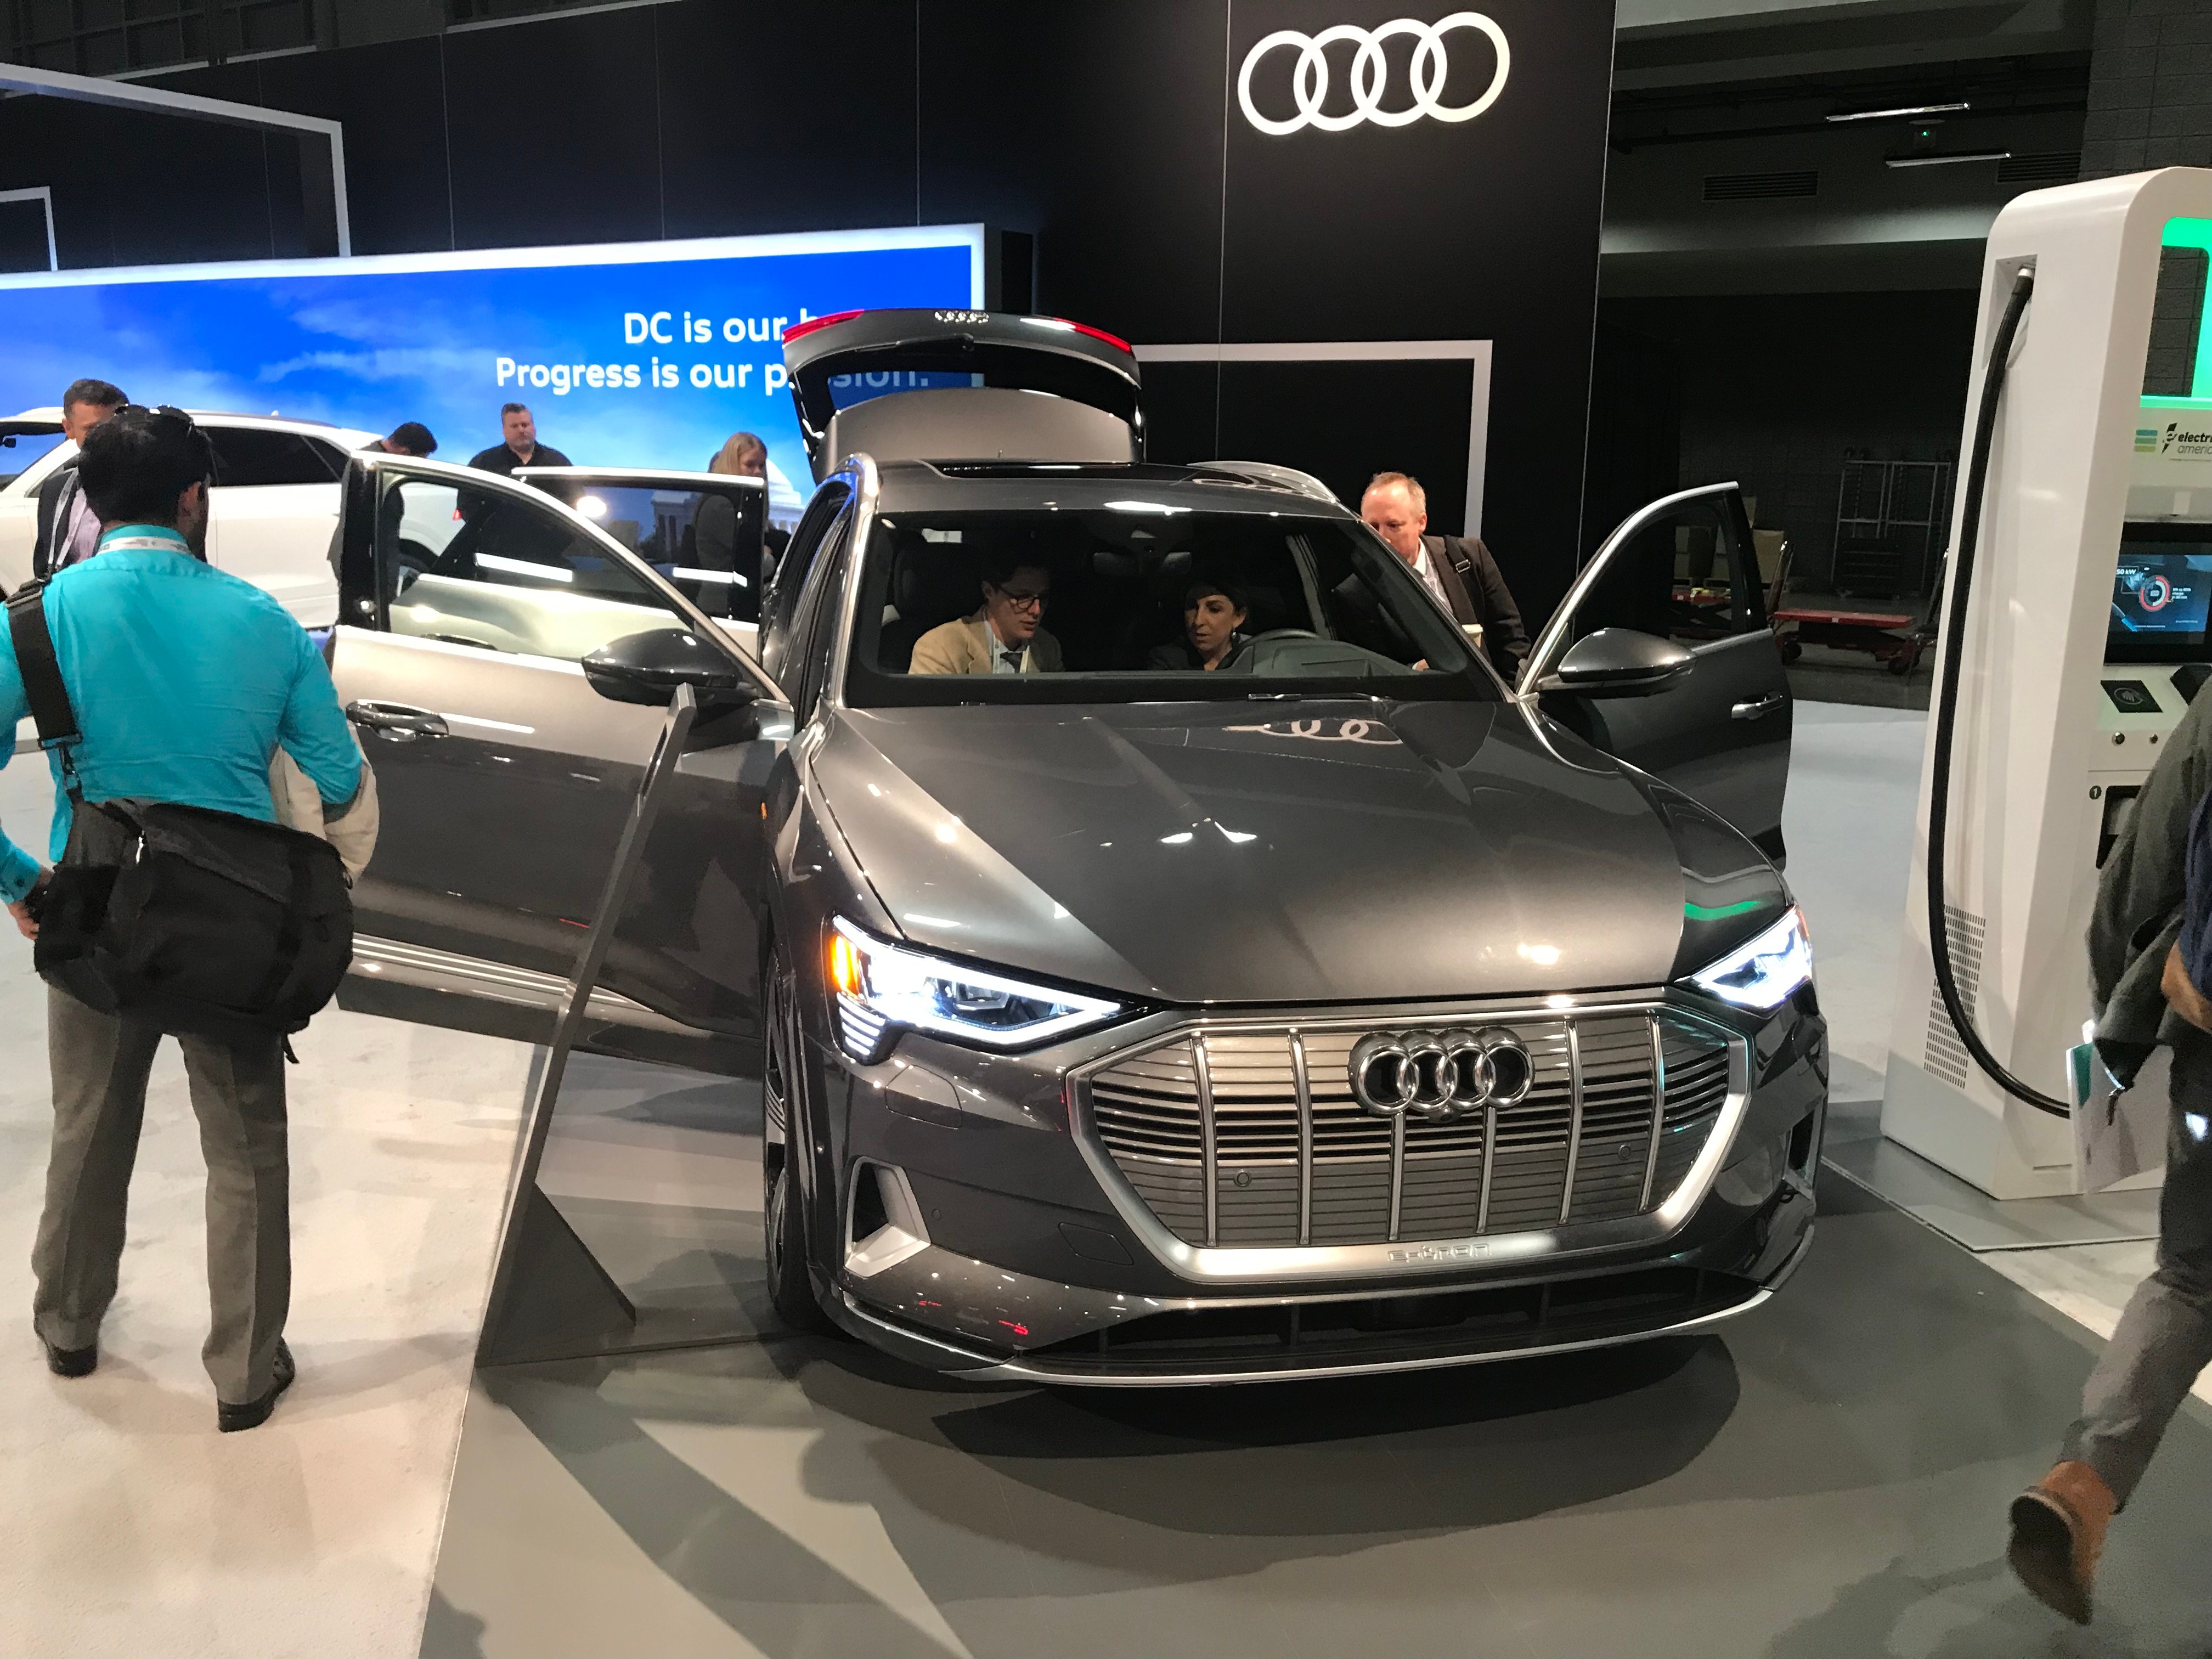 Audi Show Image - Blog Post